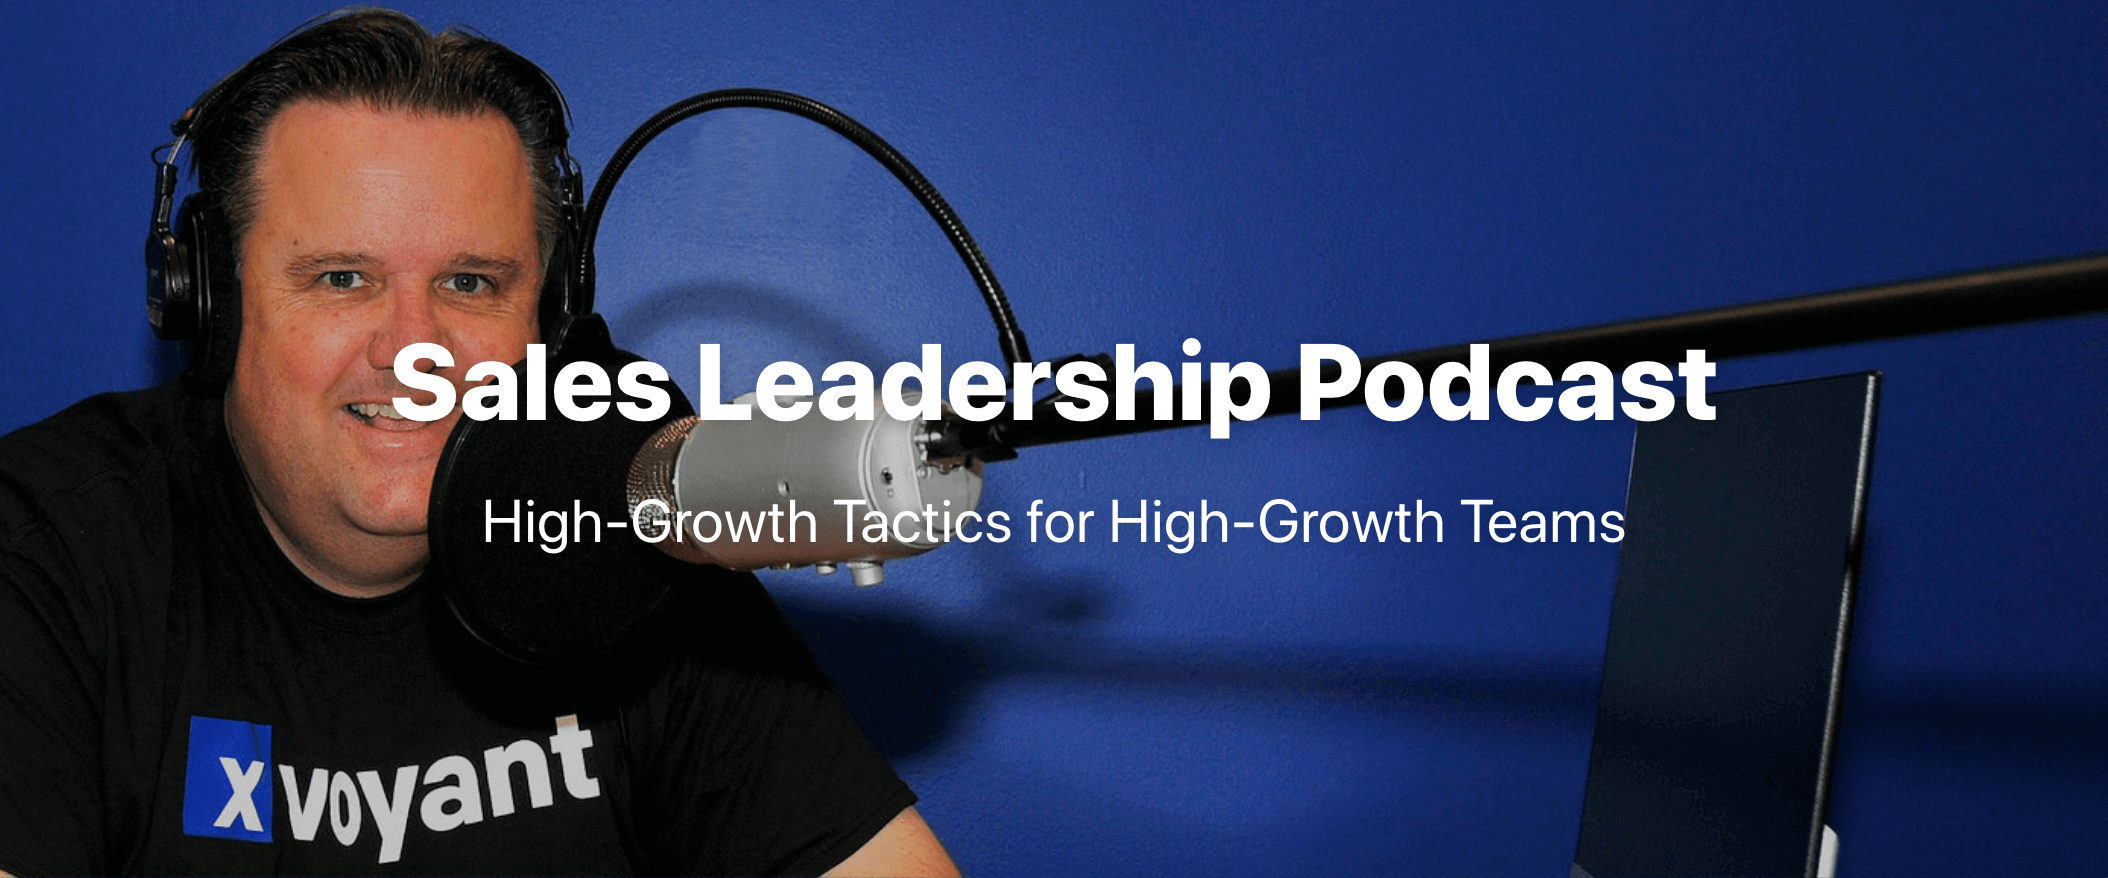 Sales Leadership Podcast